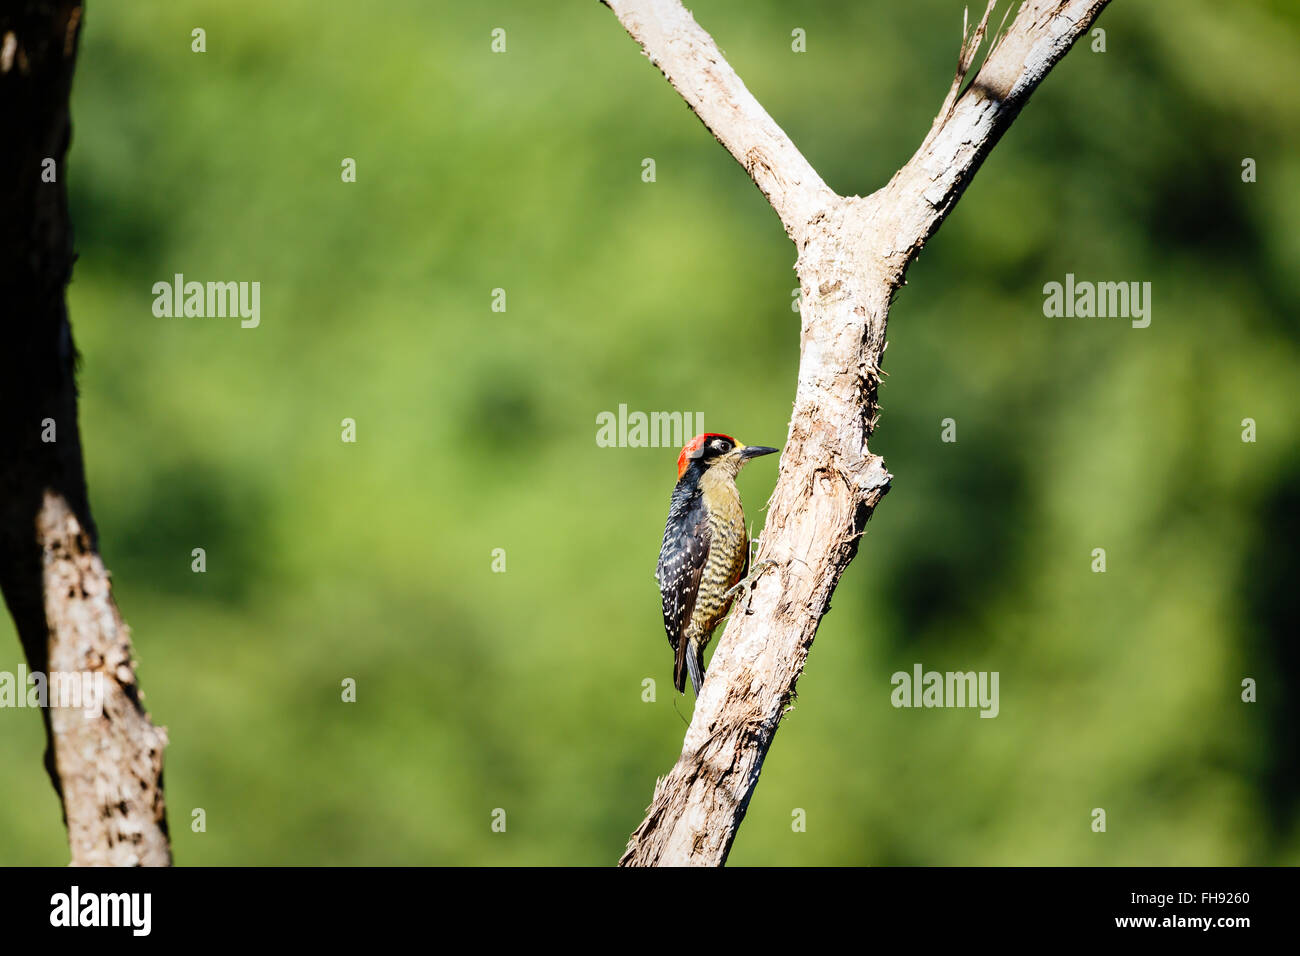 Black-cheeked Woodpecker, Melanerpes pucherani, pecking on tree Stock Photo